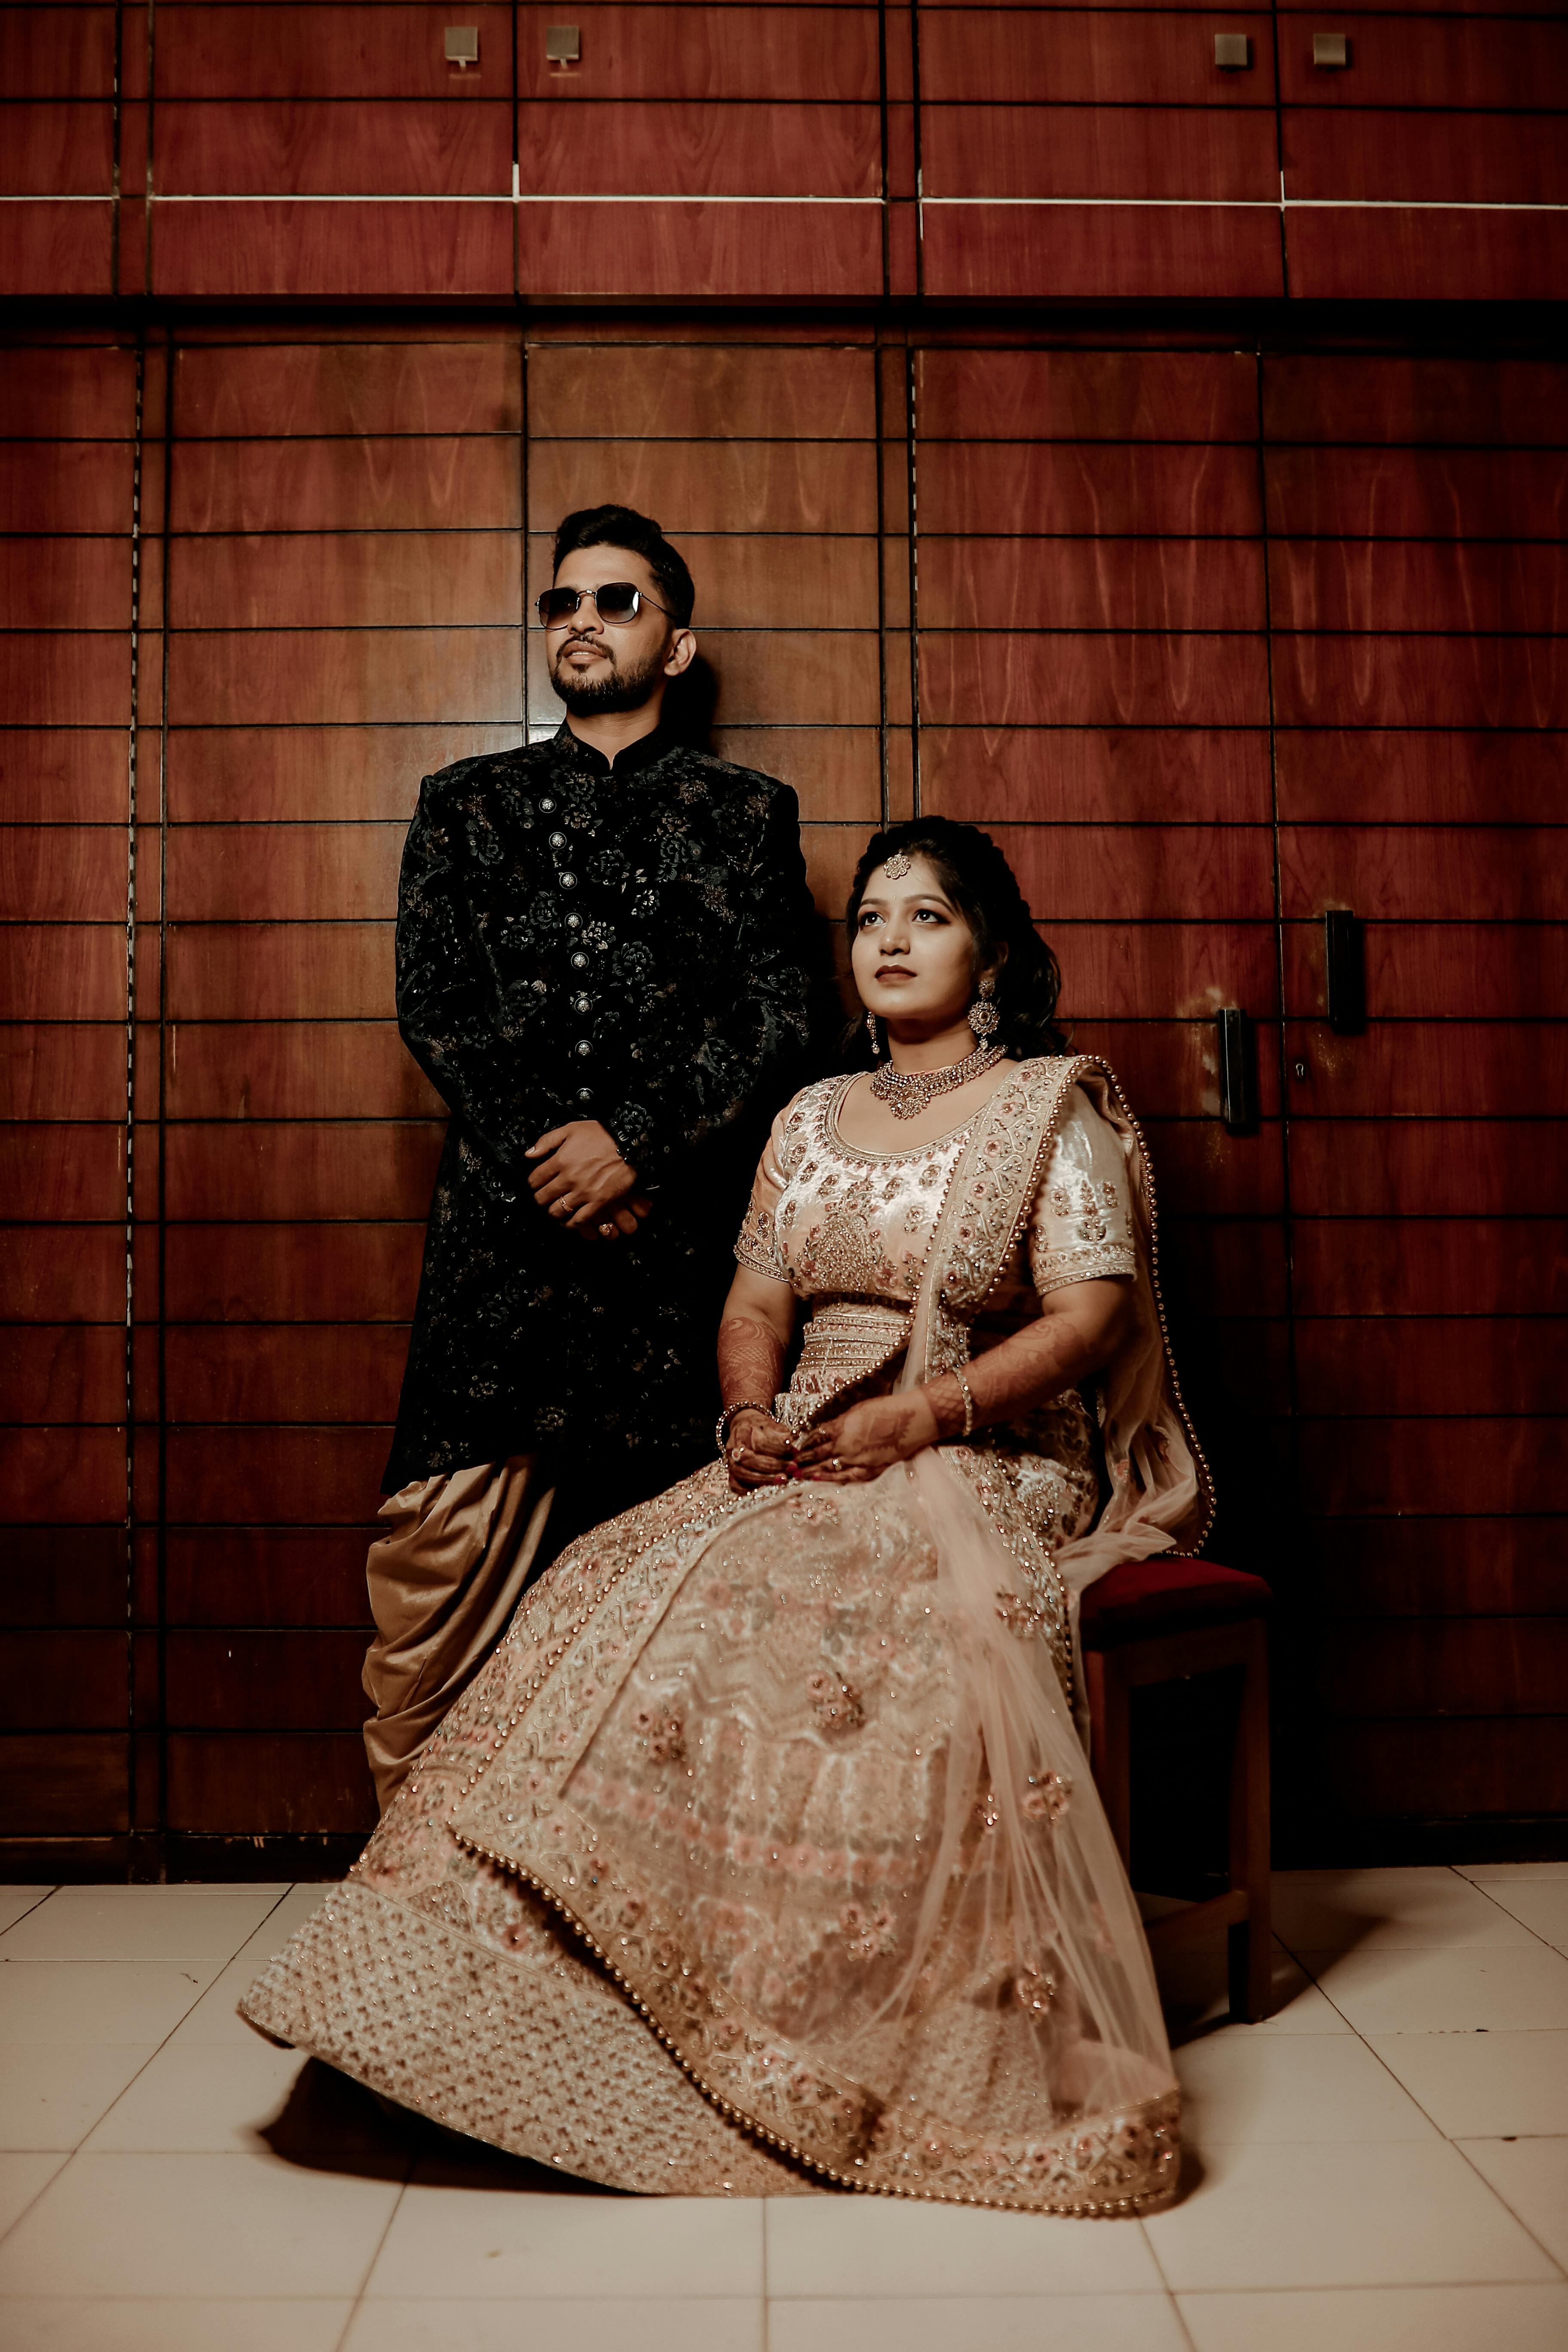 Best Indian Wedding Photographers Houston TX for Photos Videos